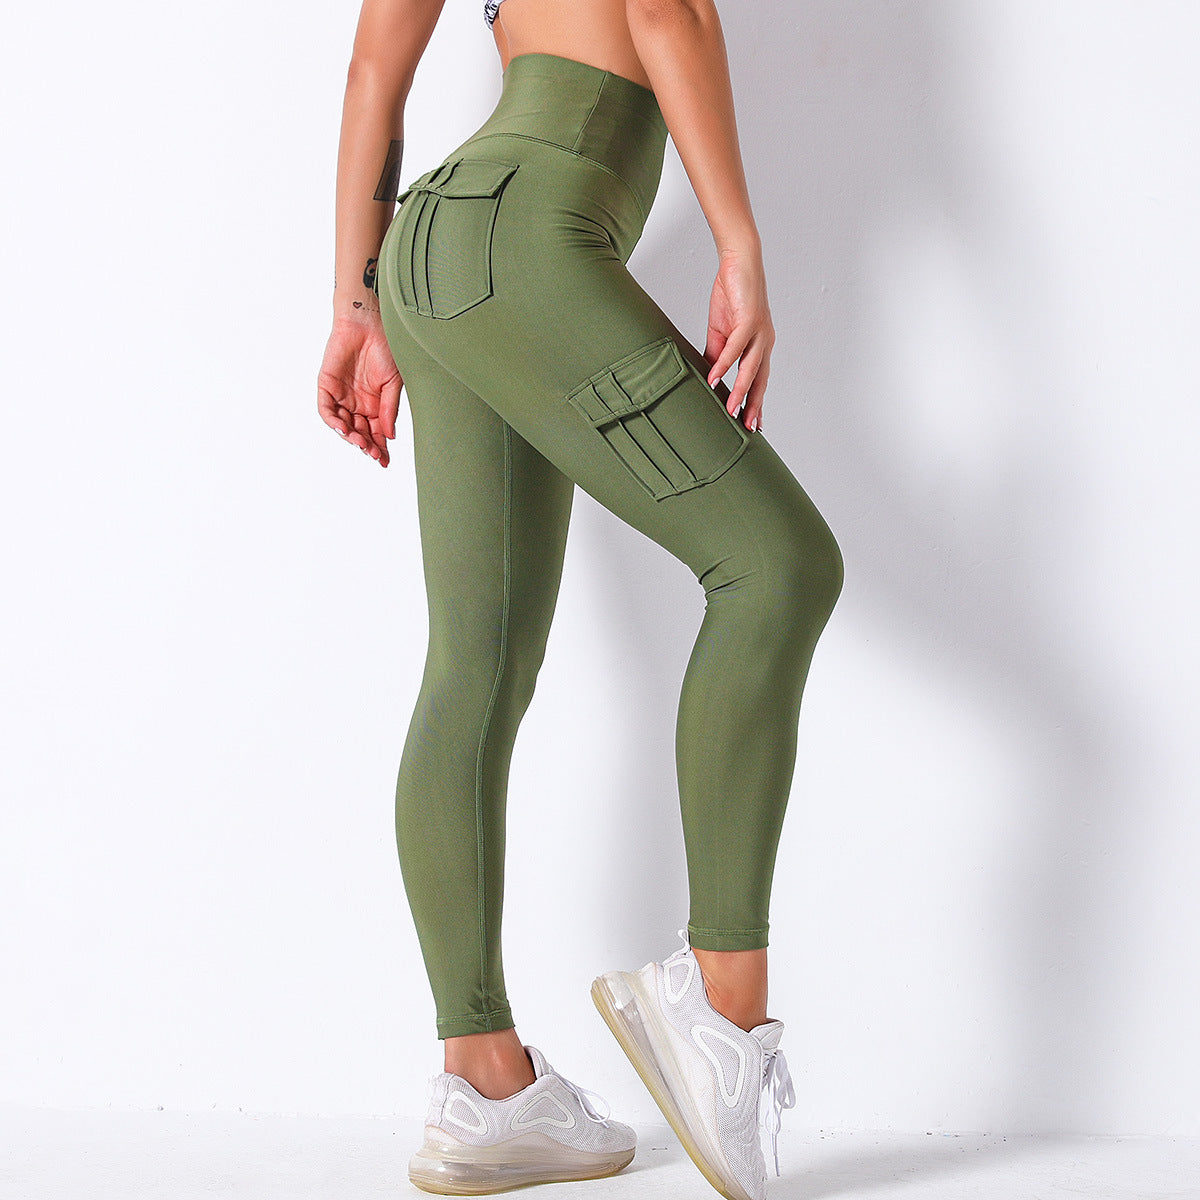 Multi-Pocket Pants Yoga Pants Women Overalls Stitching Tight Sports Running Fitness Yoga Pants Yoga Pants